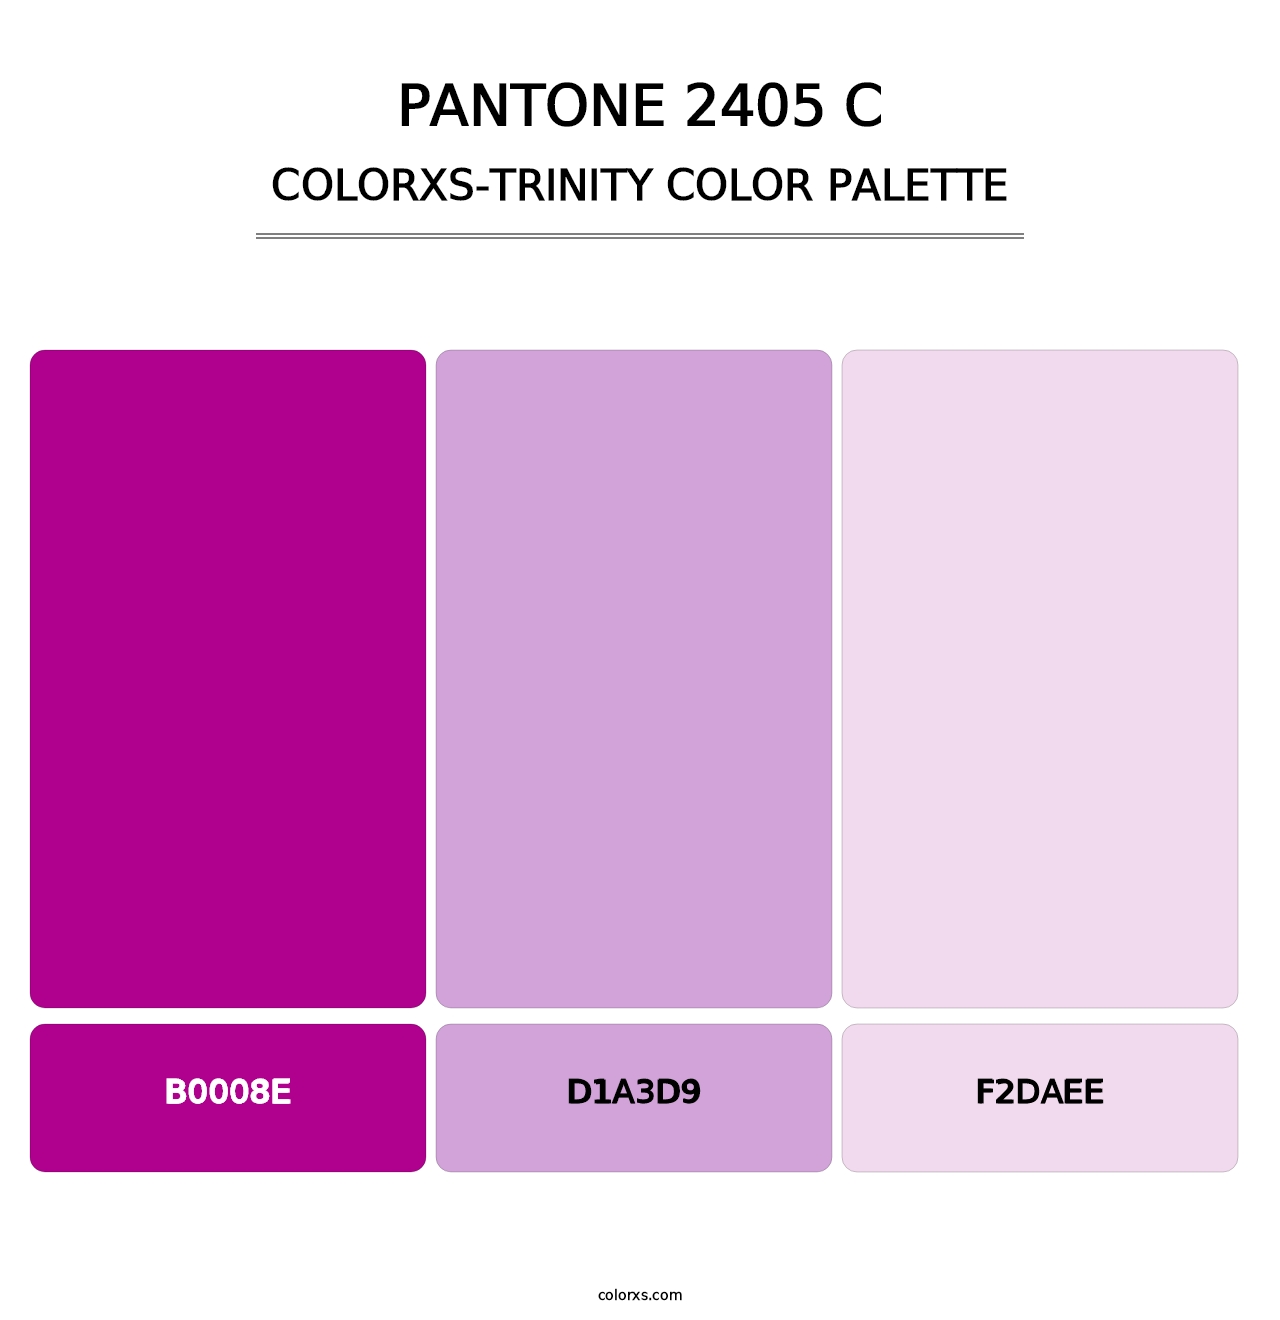 PANTONE 2405 C - Colorxs Trinity Palette